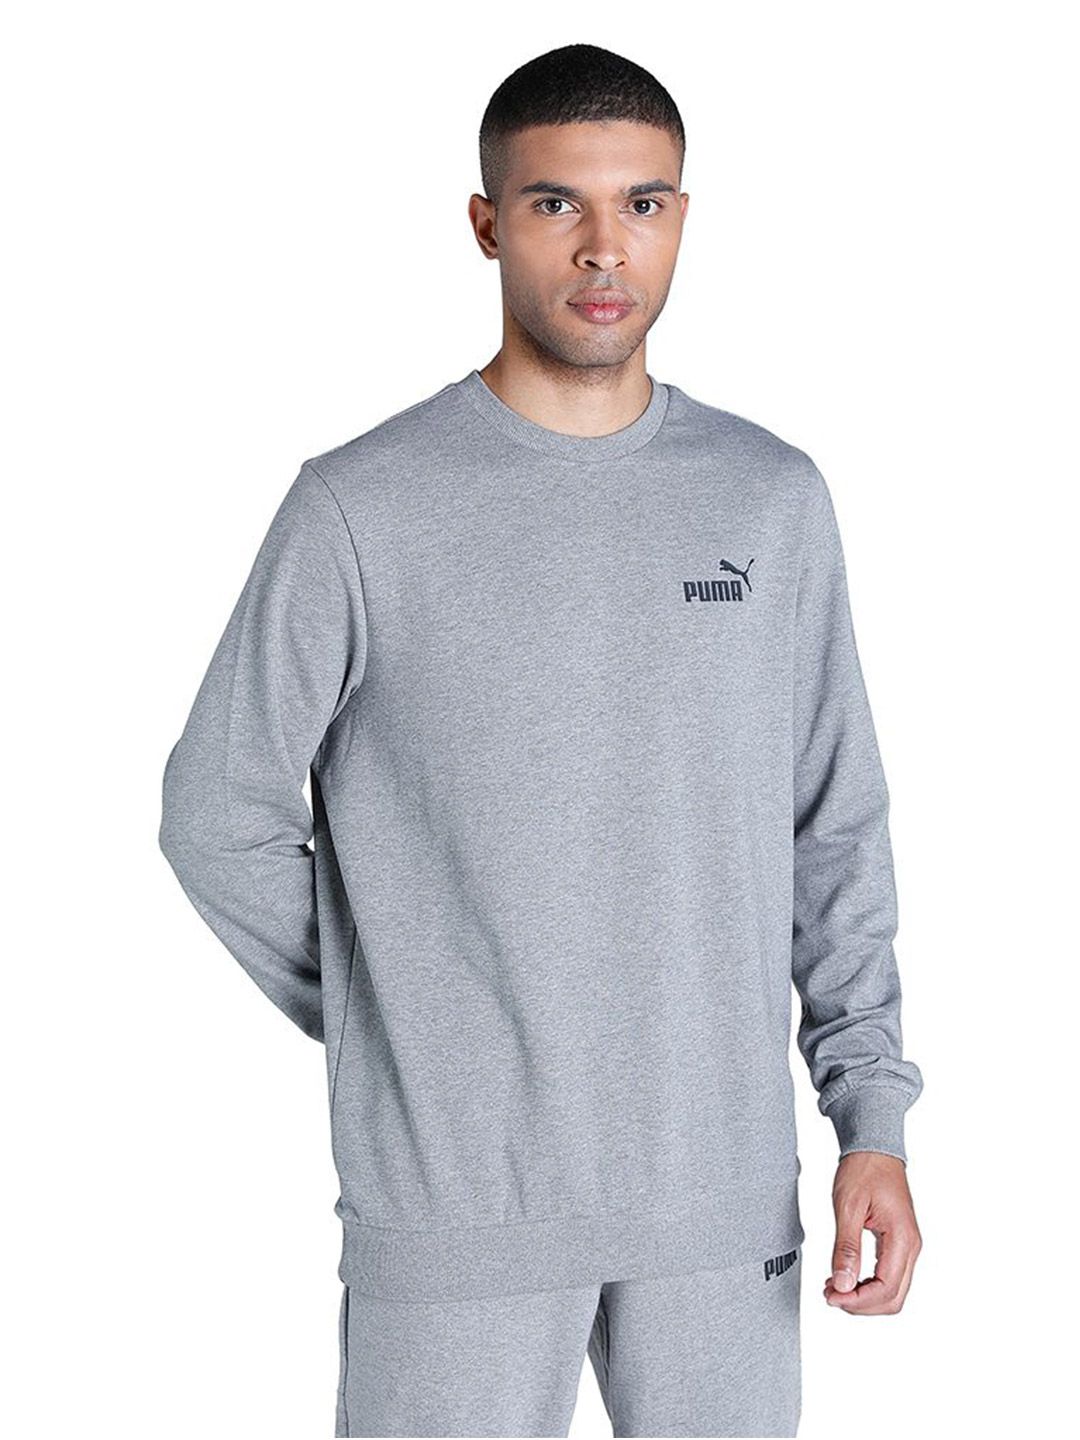 Buy Men Medium Logo Essentials Gray Fit From T-Shirt Printed Heather Regular Fancode